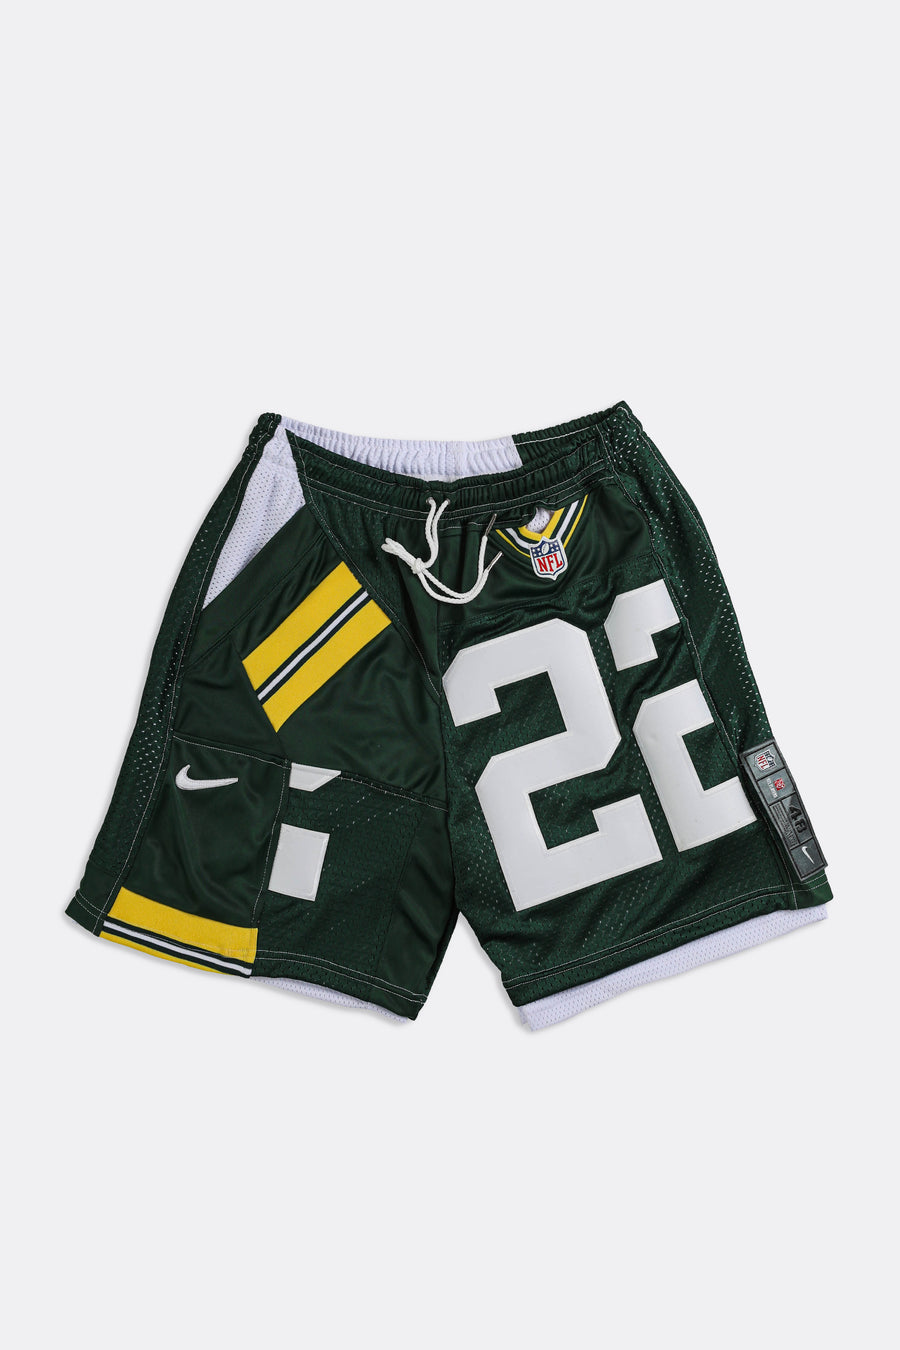 Unisex Rework Packers NFL Jersey Shorts - Women-M, Men-S